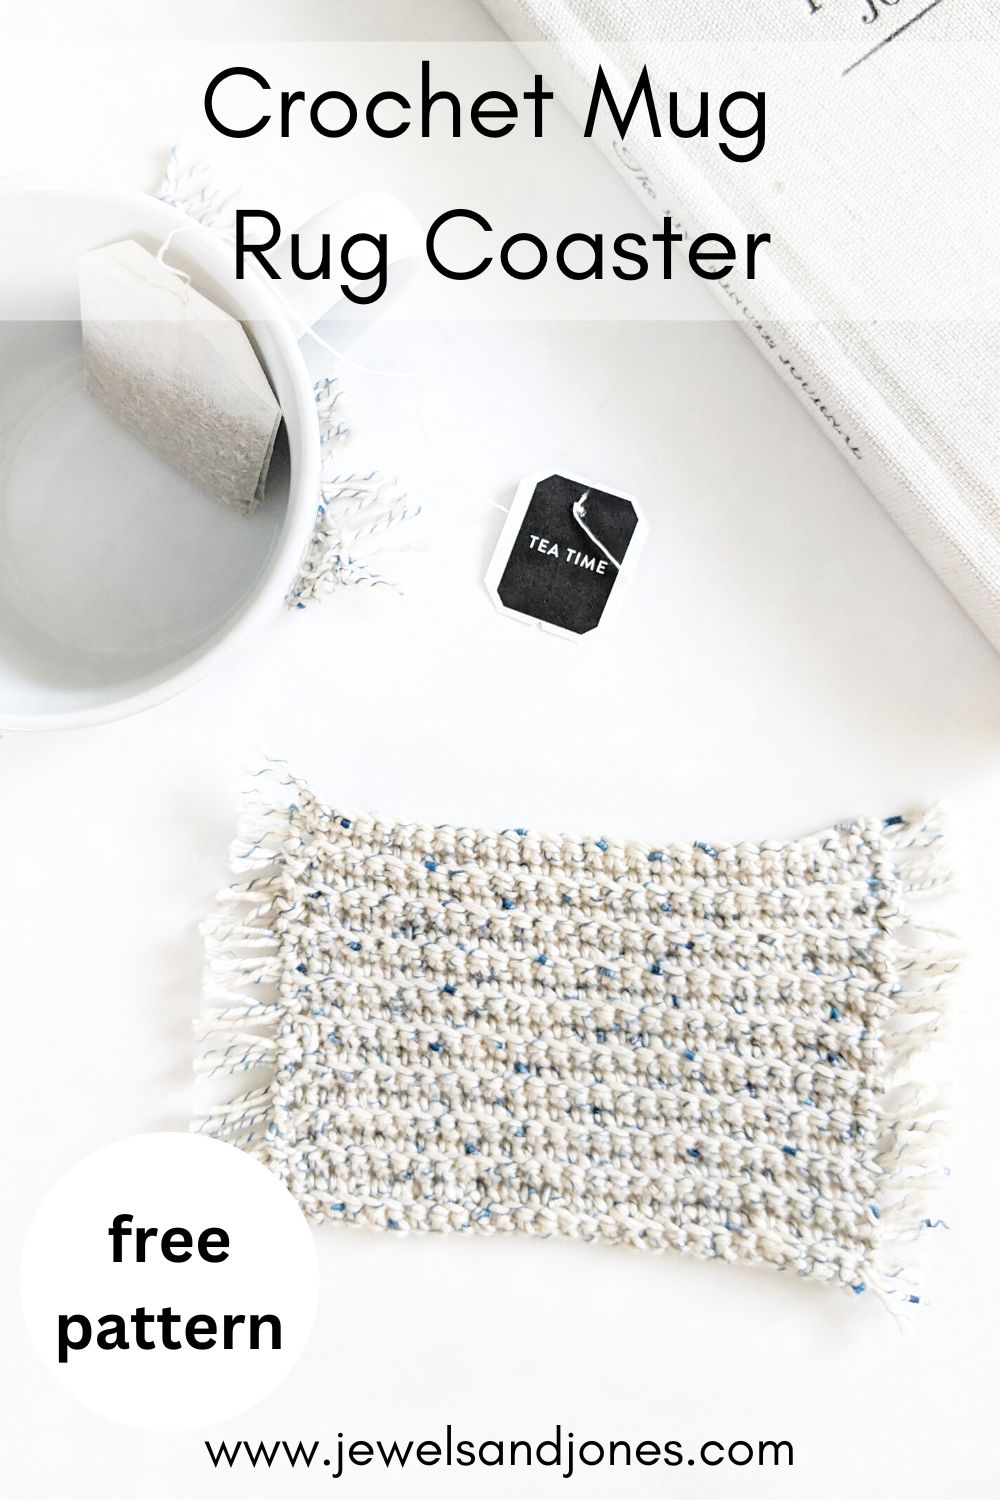 A crochet rectangle mug rug coaster pattern with a ceramic mug and tea bag.